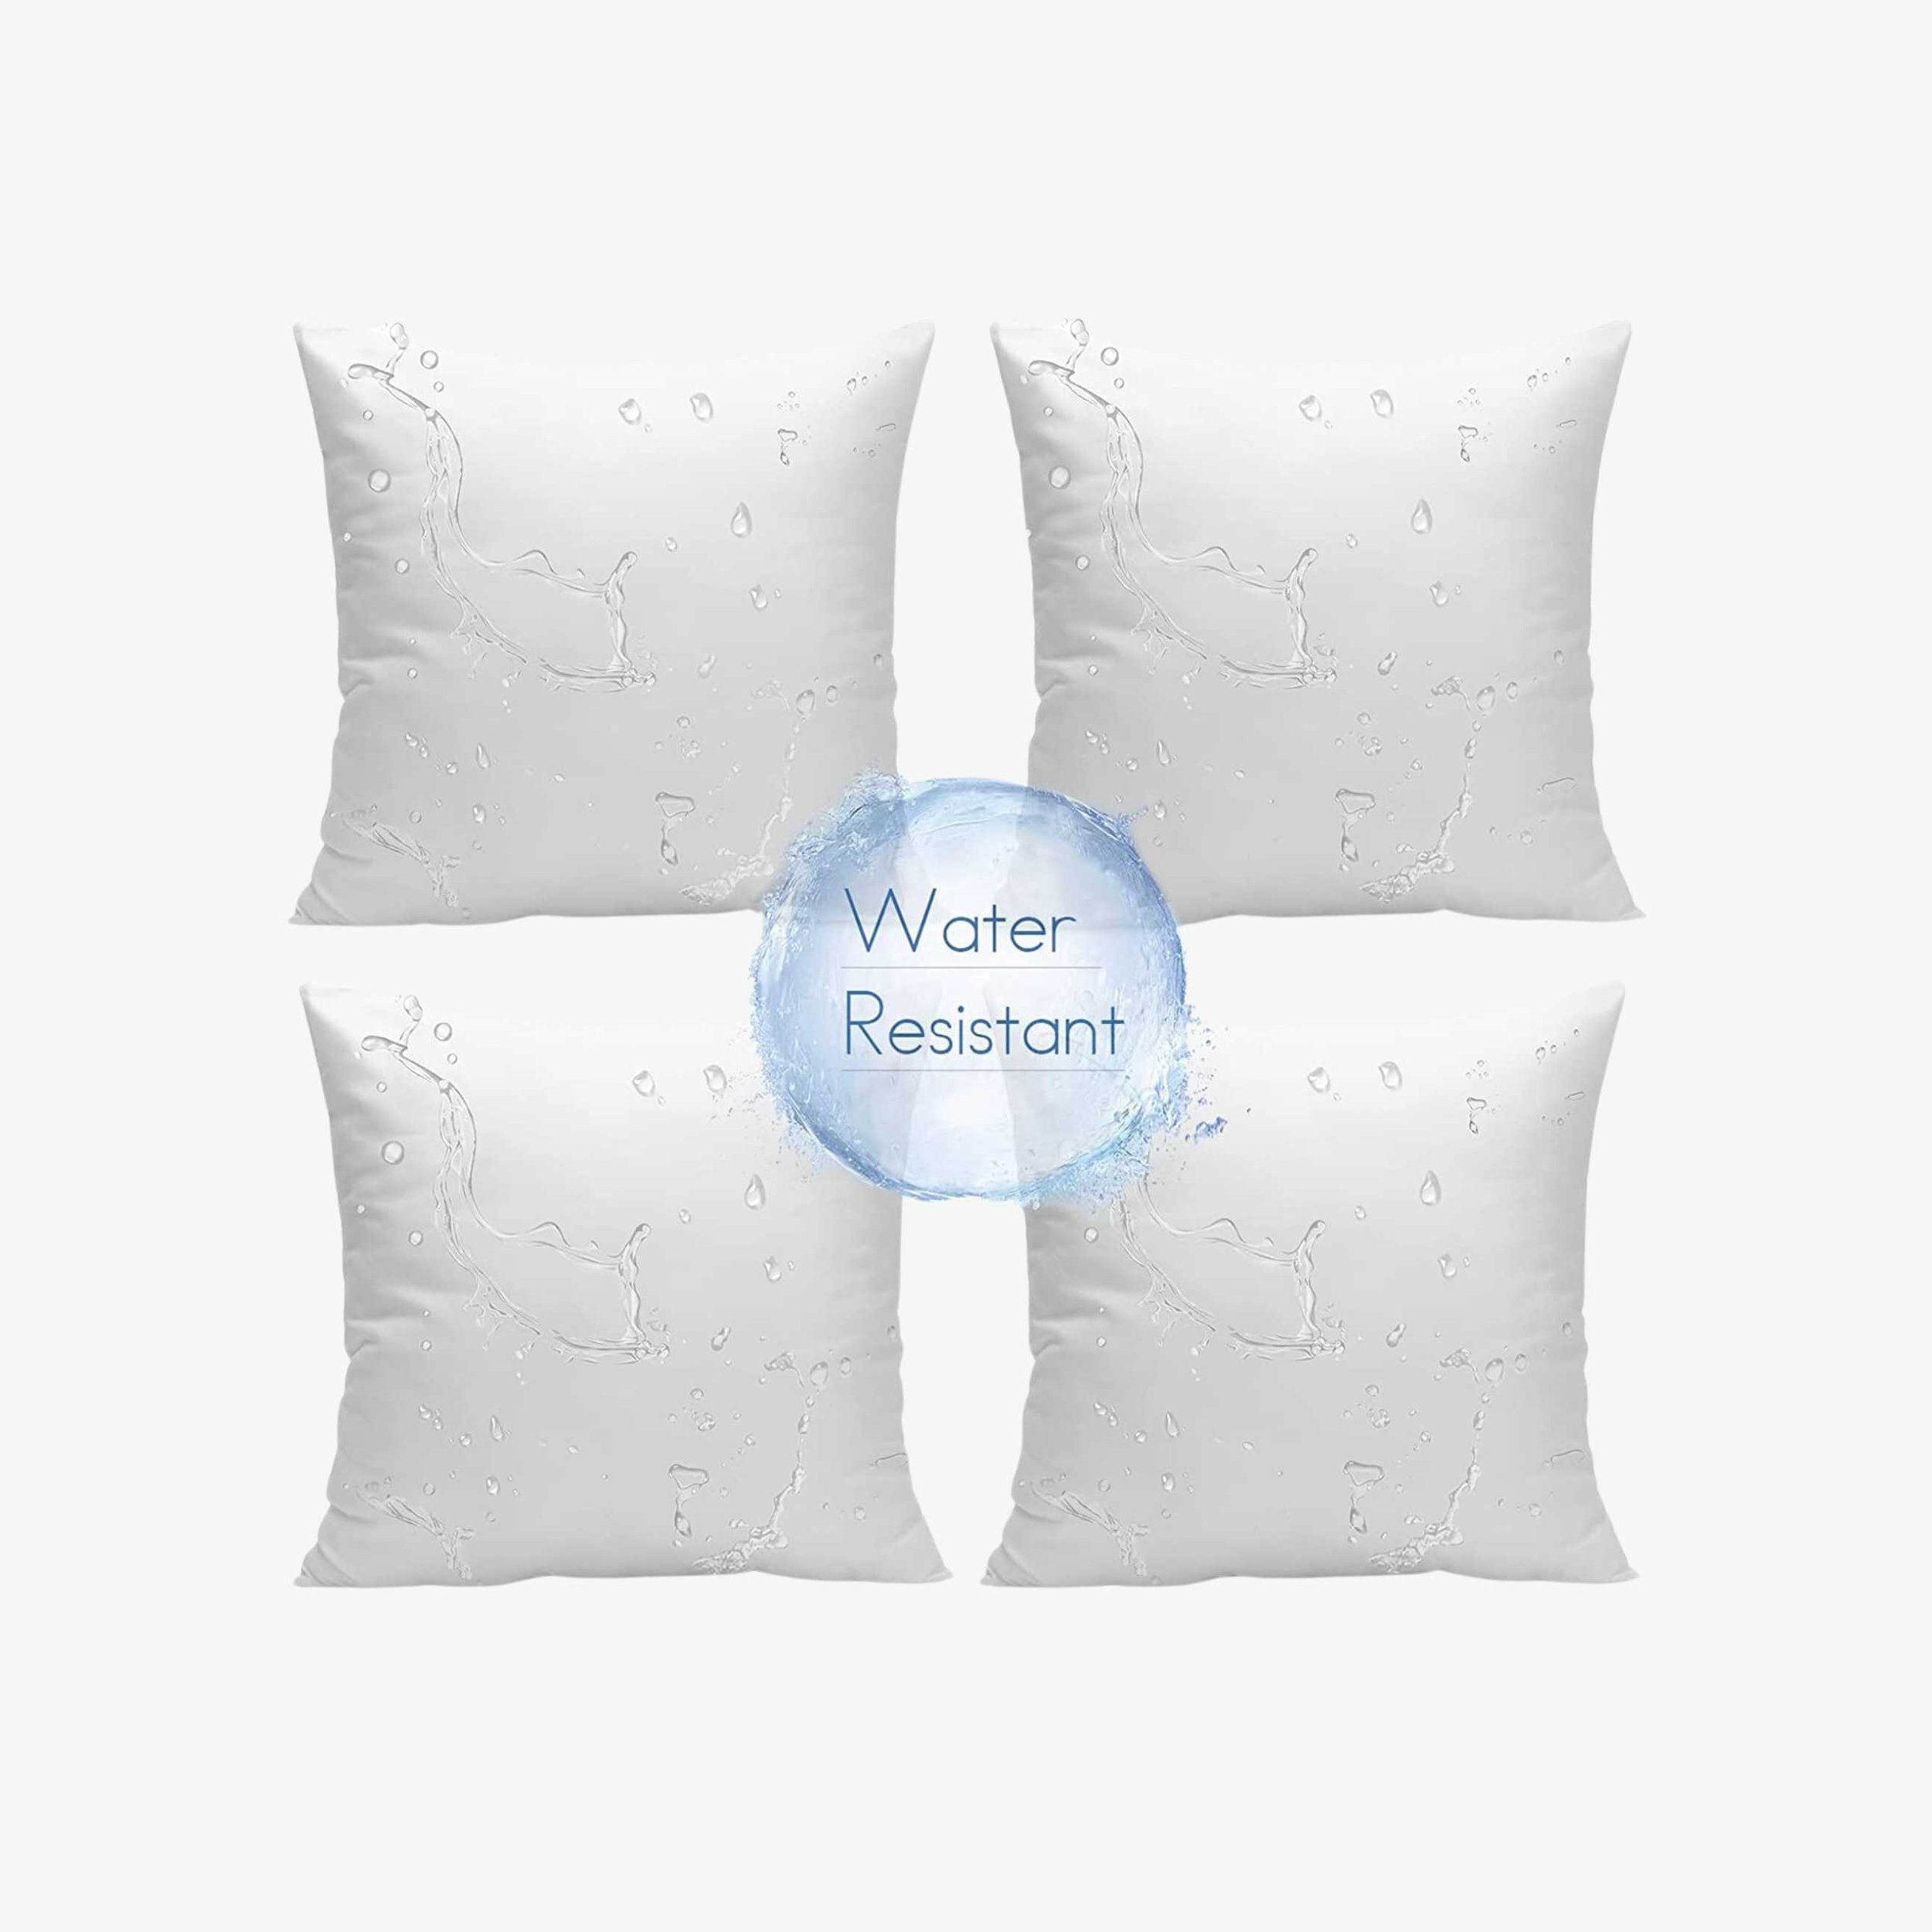 Water Resistant Pillow Insert 4-Pack.jpg